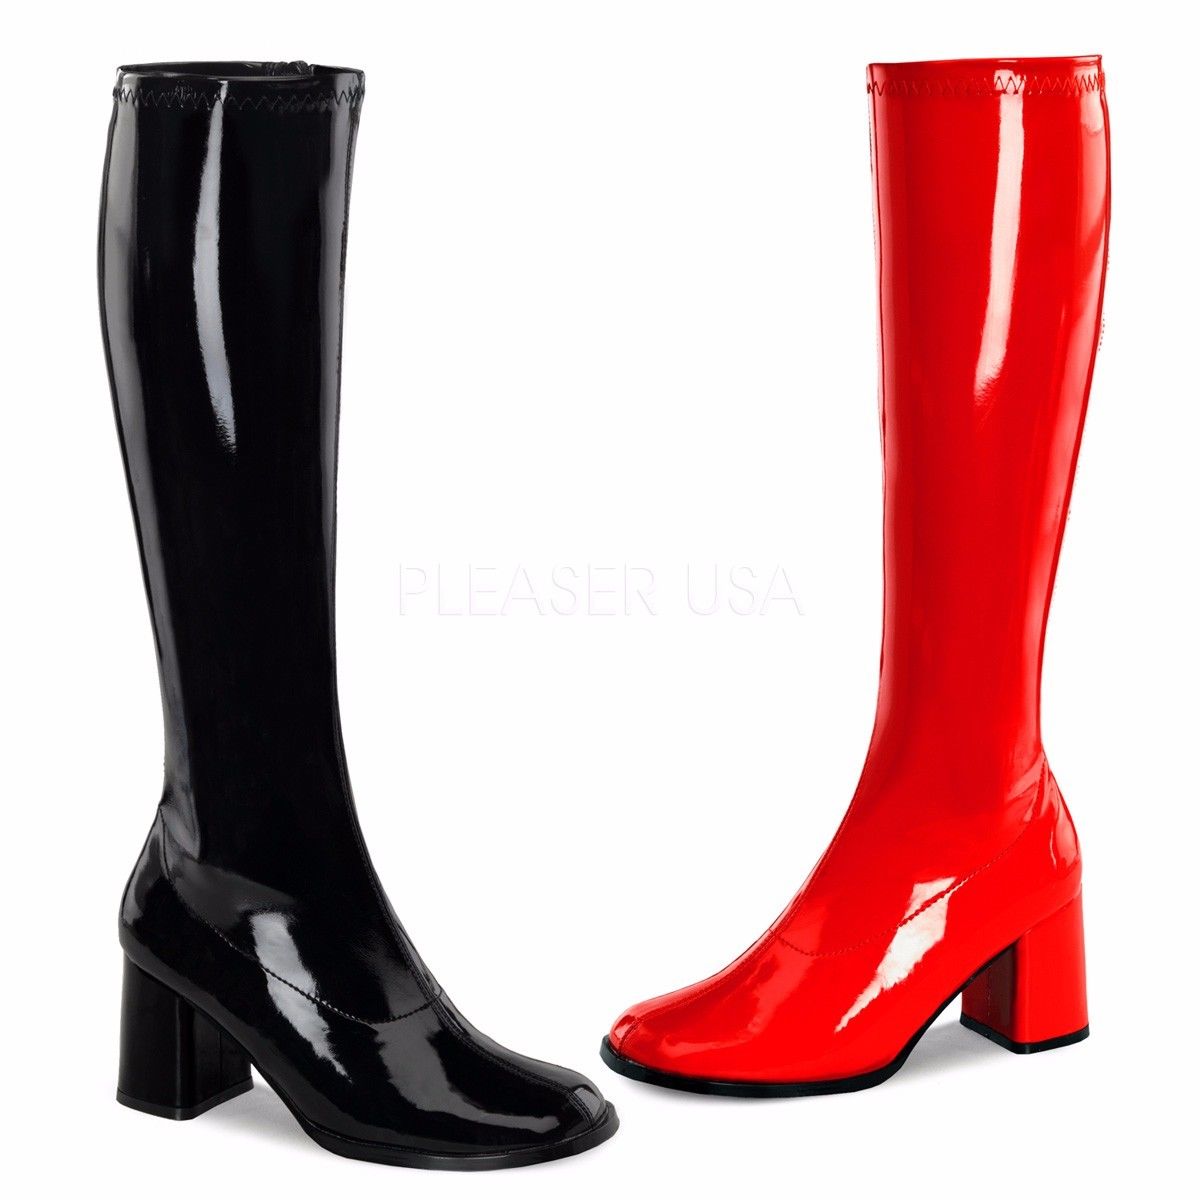 Discontinued FUNTASMA Gogo-300HQ Black Red Harley Quinn Cosplay Costume 3" Boots - A Shoe Addiction